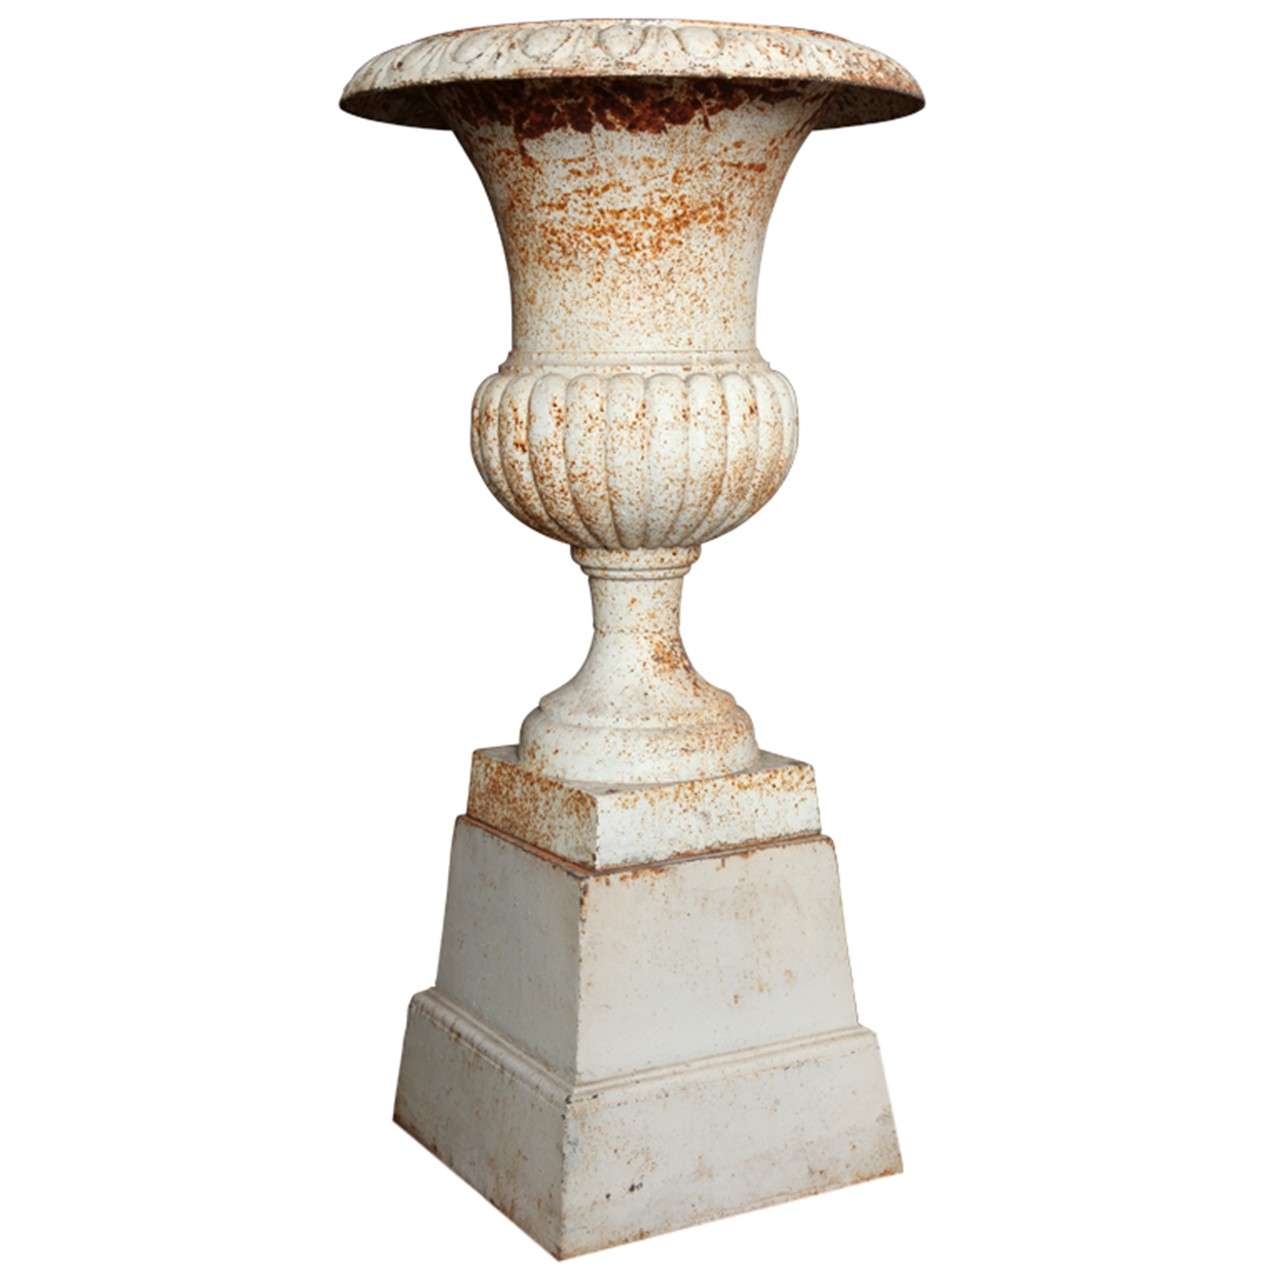 Antique Neoclassical Cast Iron Urn on pedestal c.1800